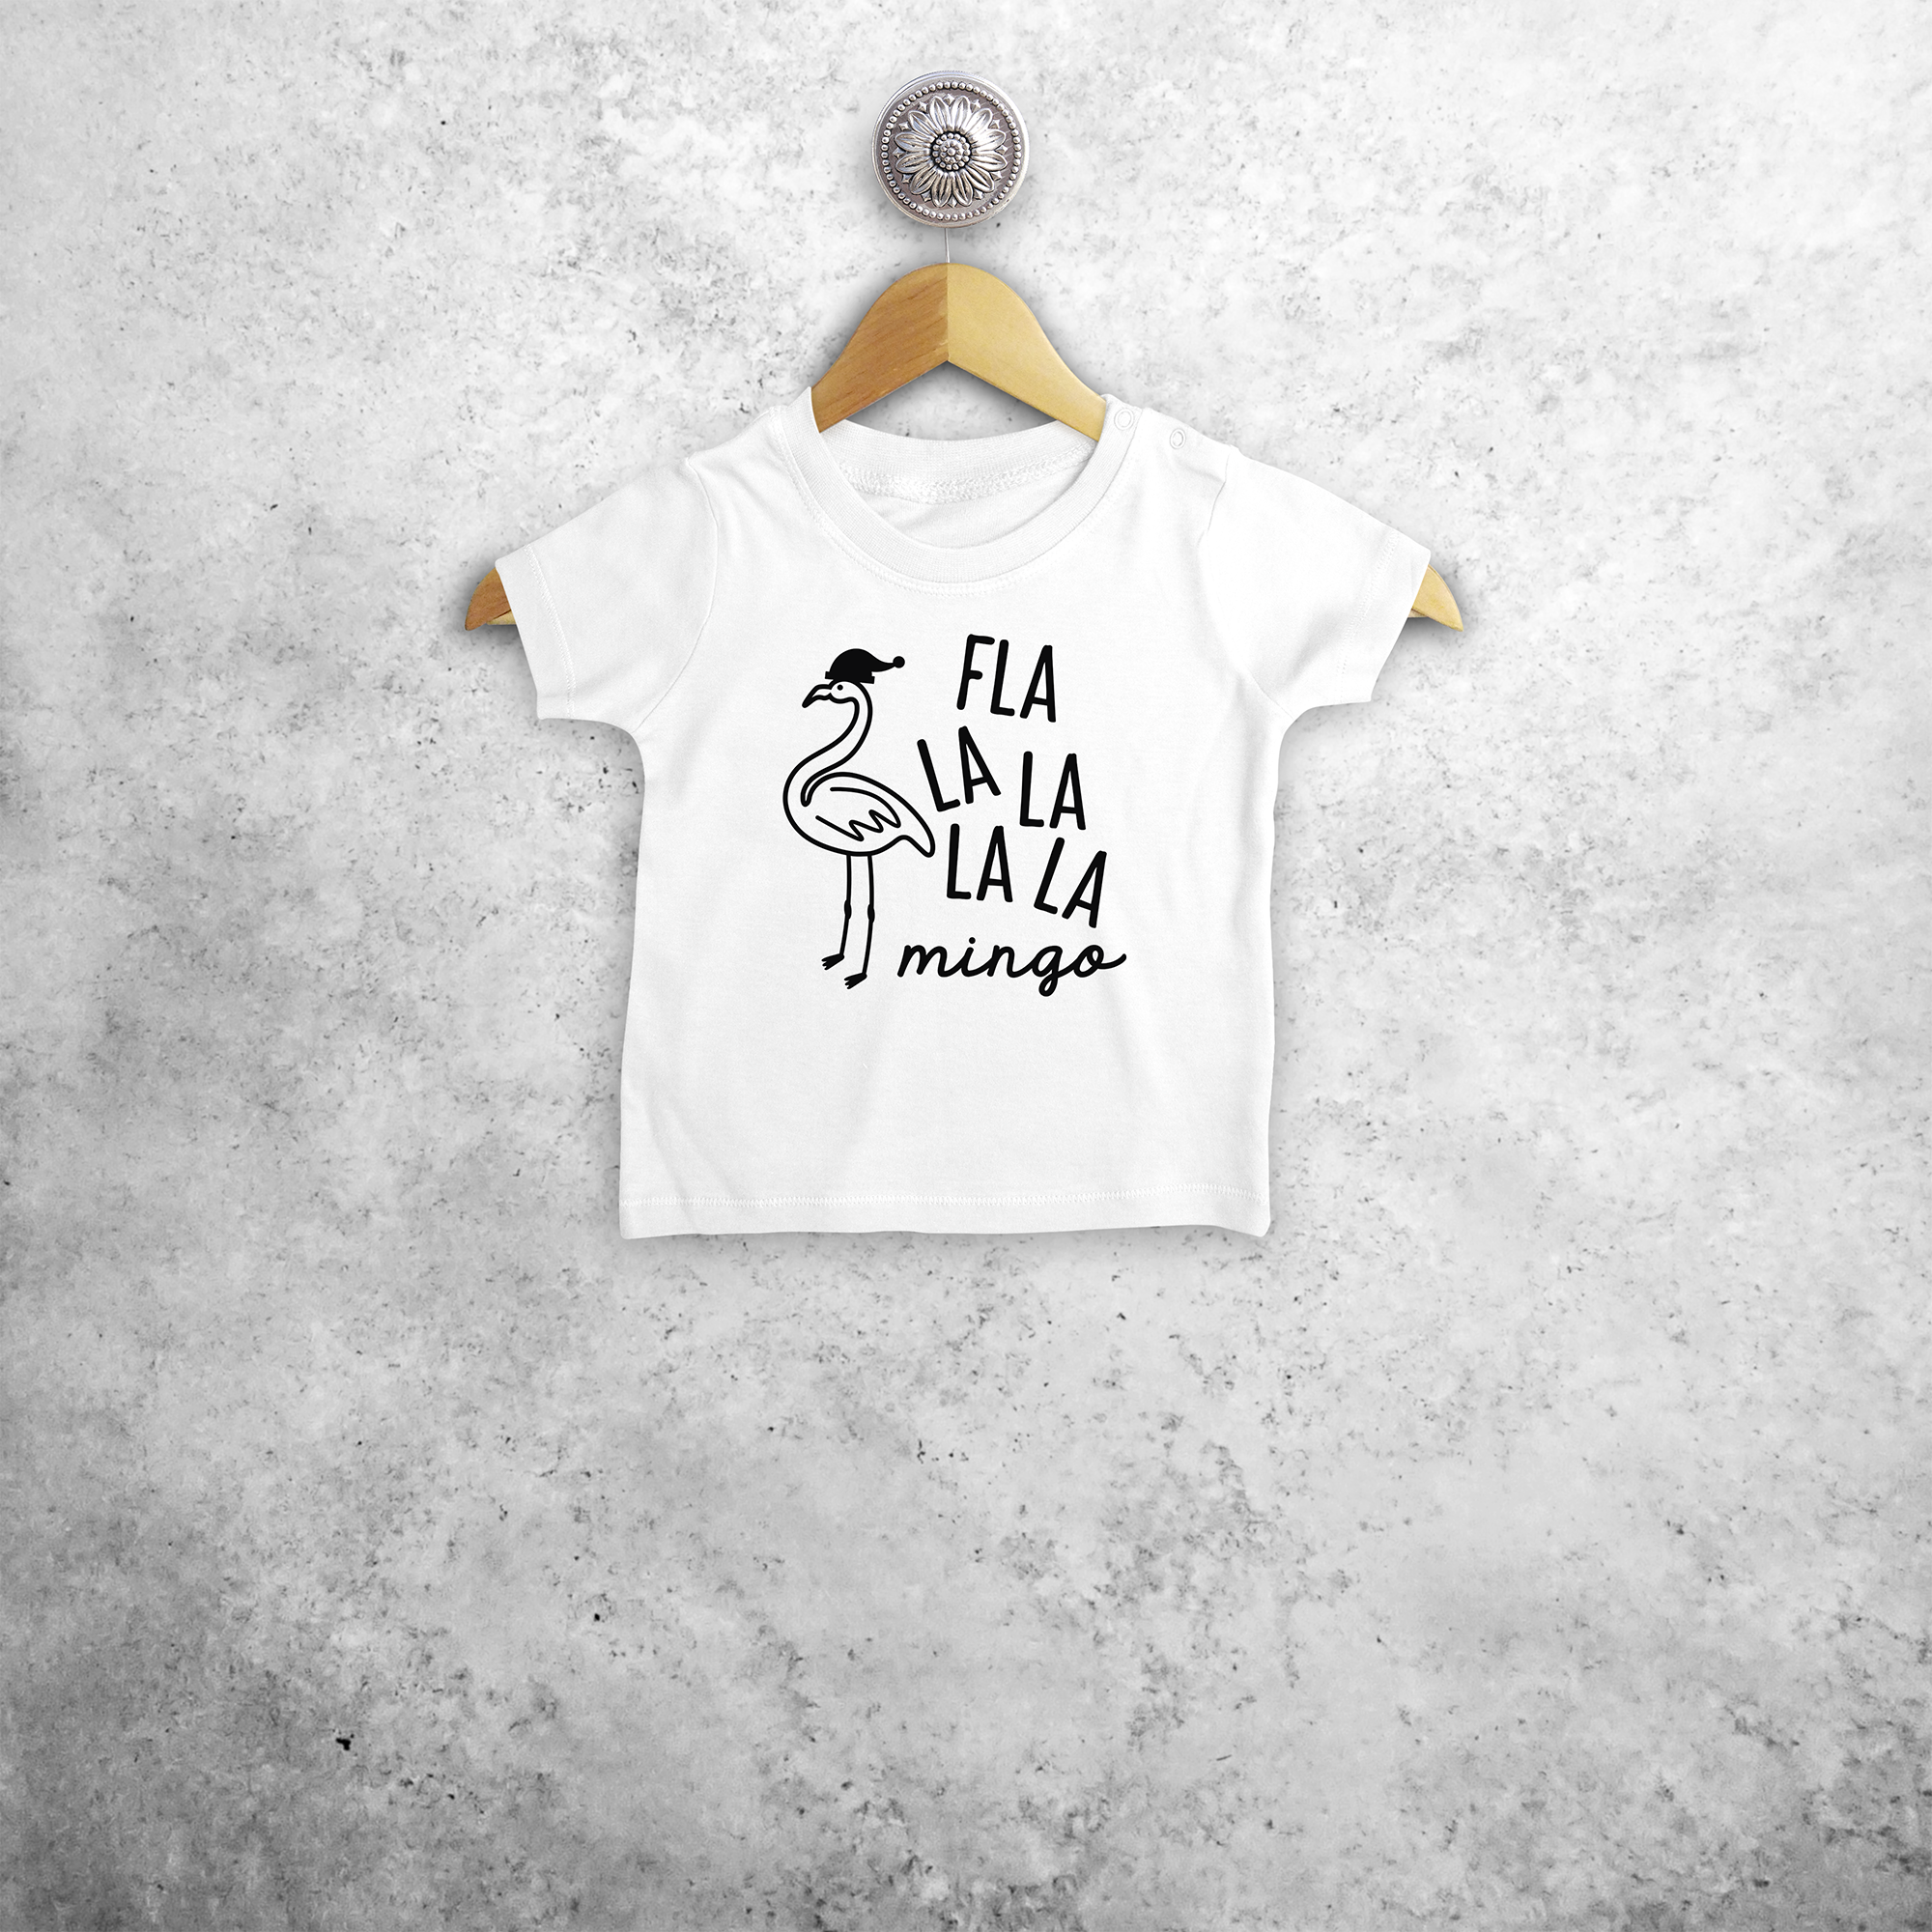 Baby or toddler shirt with short sleeves, with ‘Fla la la la la mingo’ print by KMLeon.